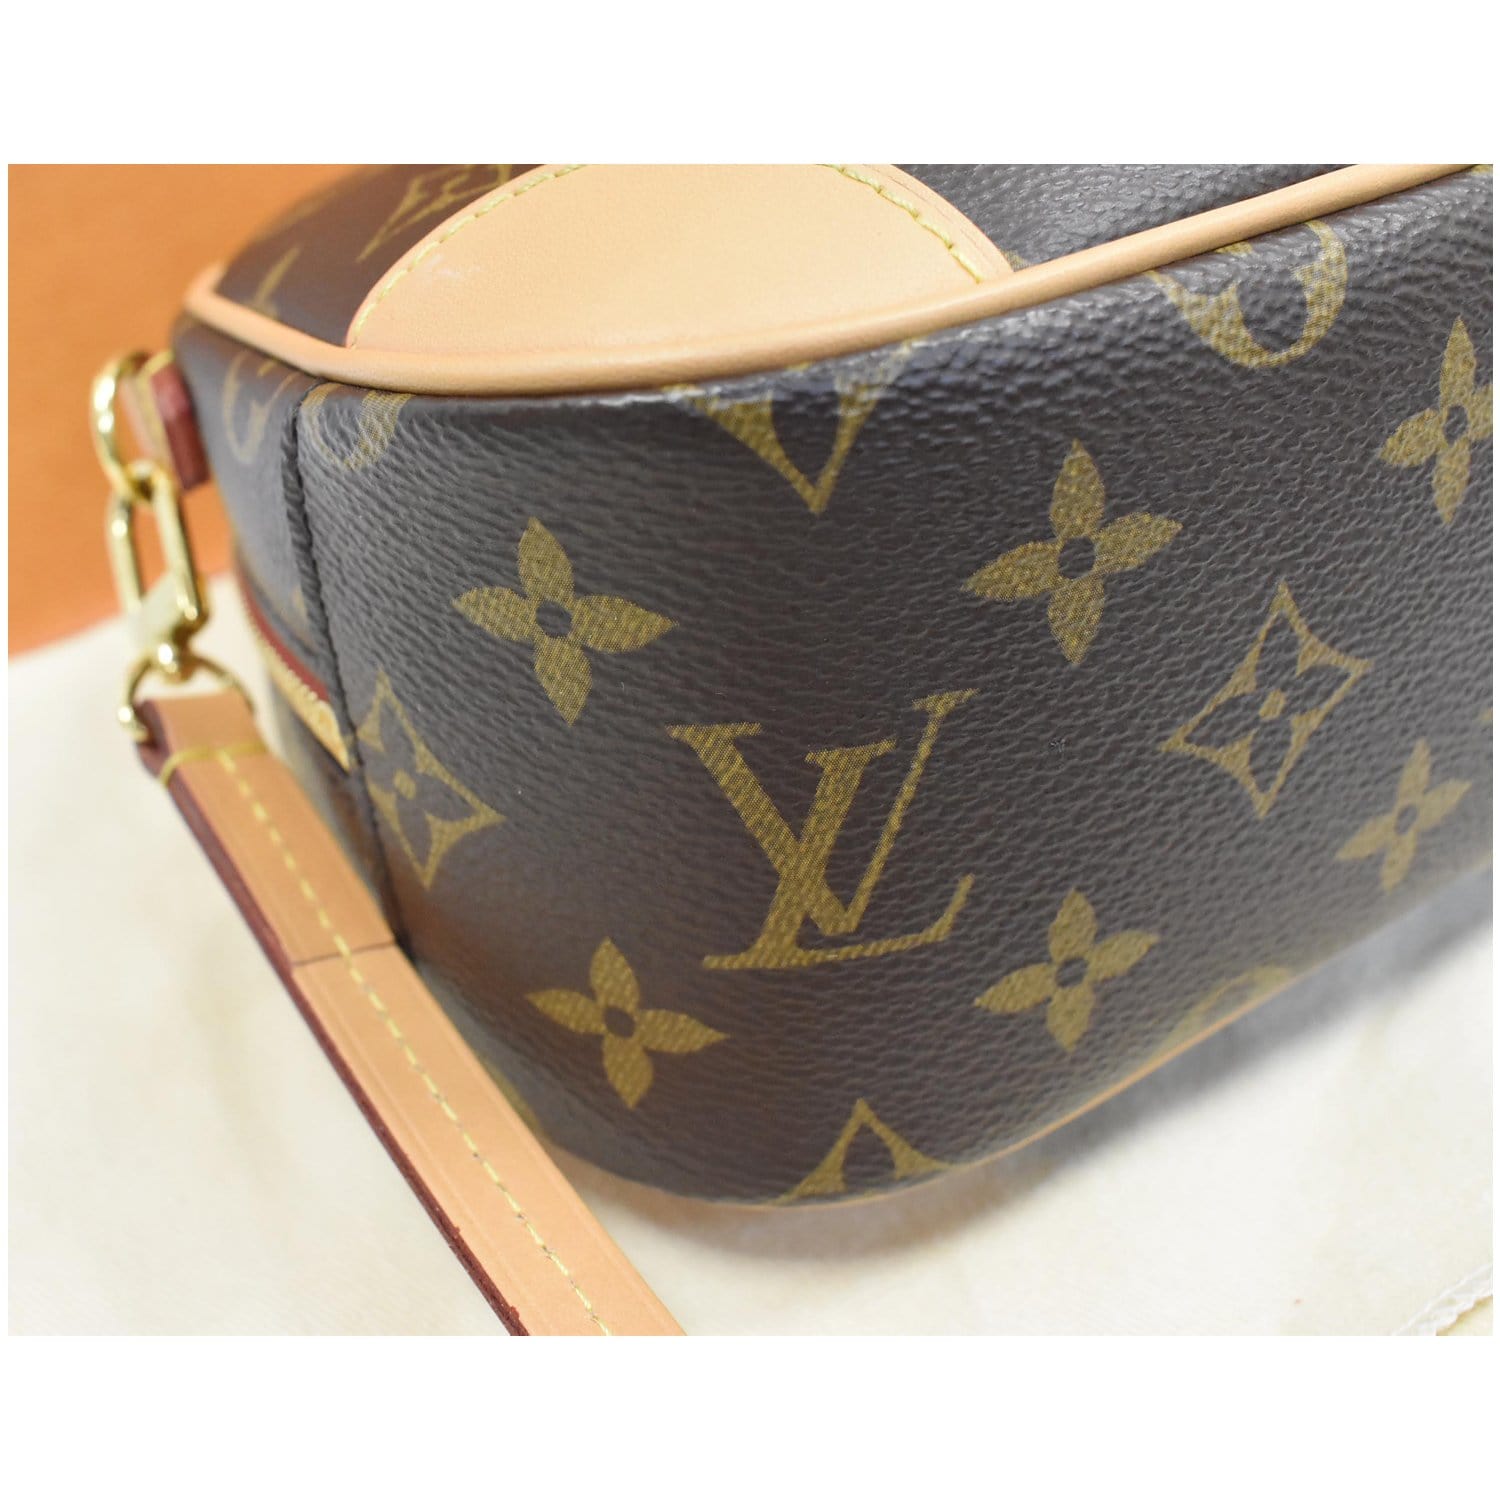 Louis Vuitton mini deauville, in monogram pattern, unused